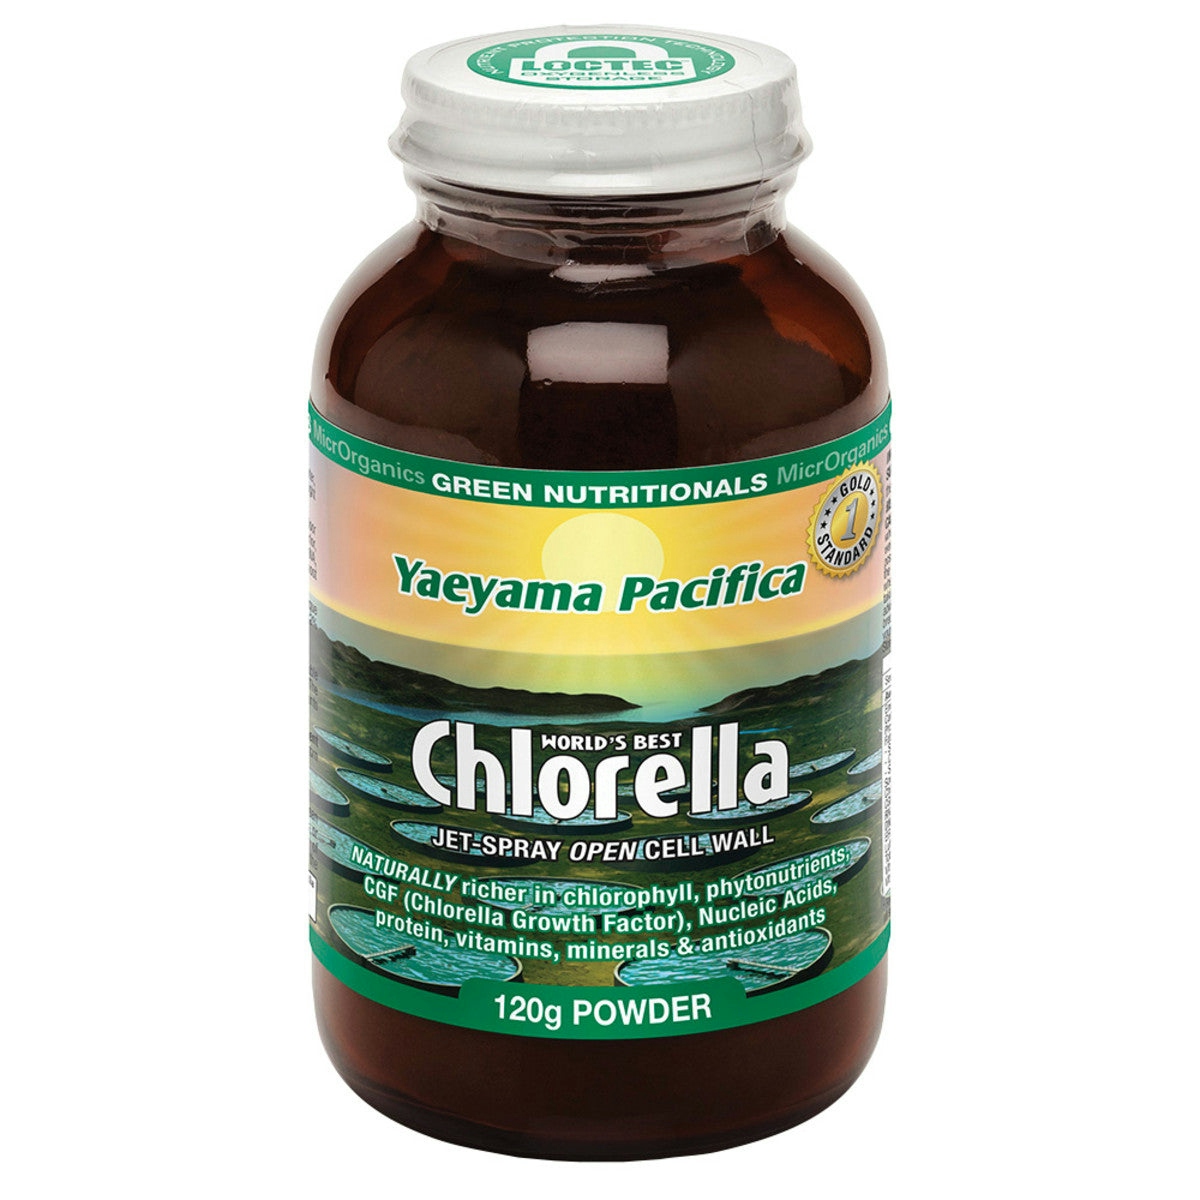 image of MicrOrganics Green Nutritionals Yaeyama Pacifica Chlorella 120g Powder on white background 